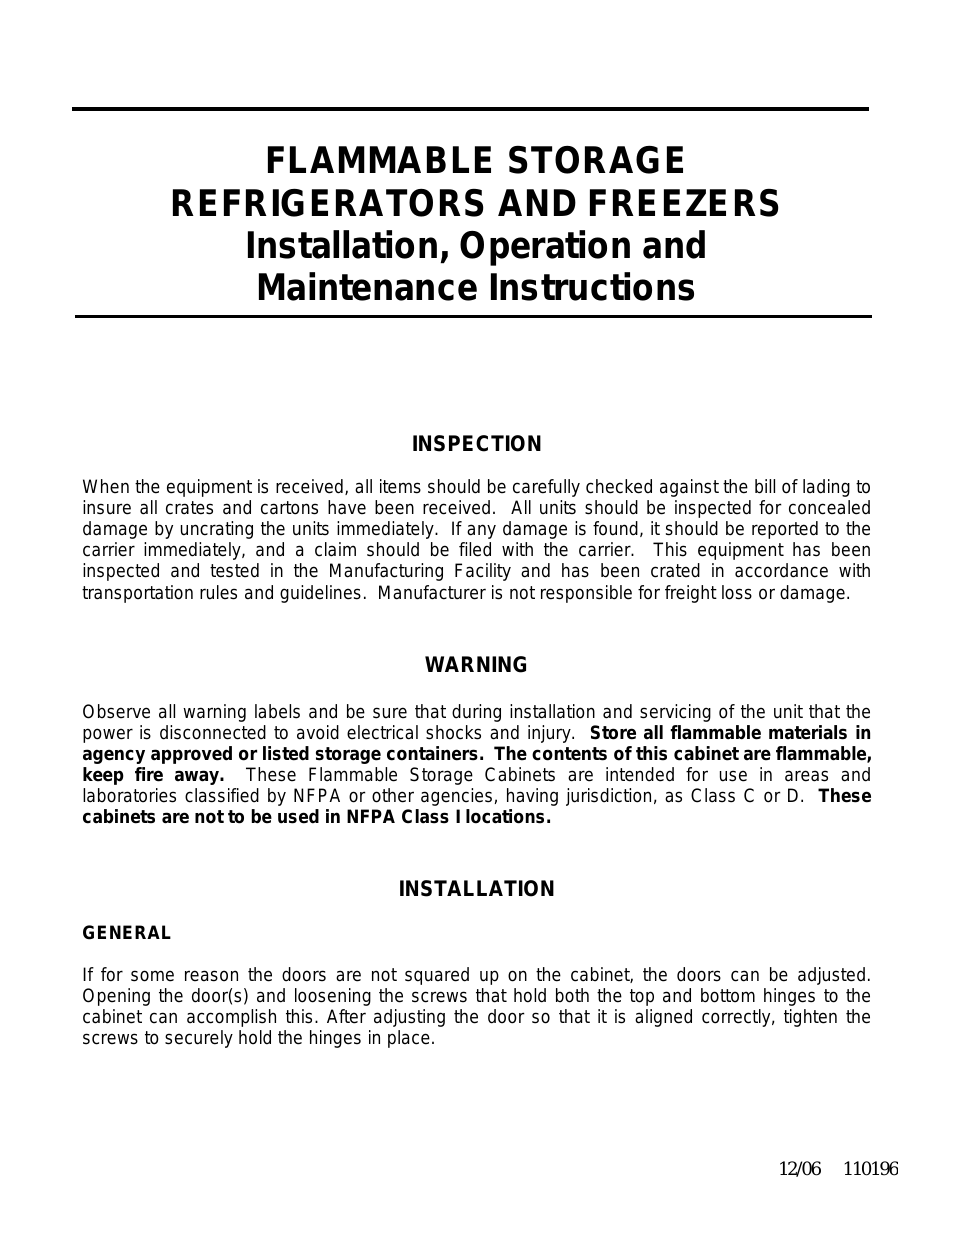 Flammable Storage Refrigerators & Freezers